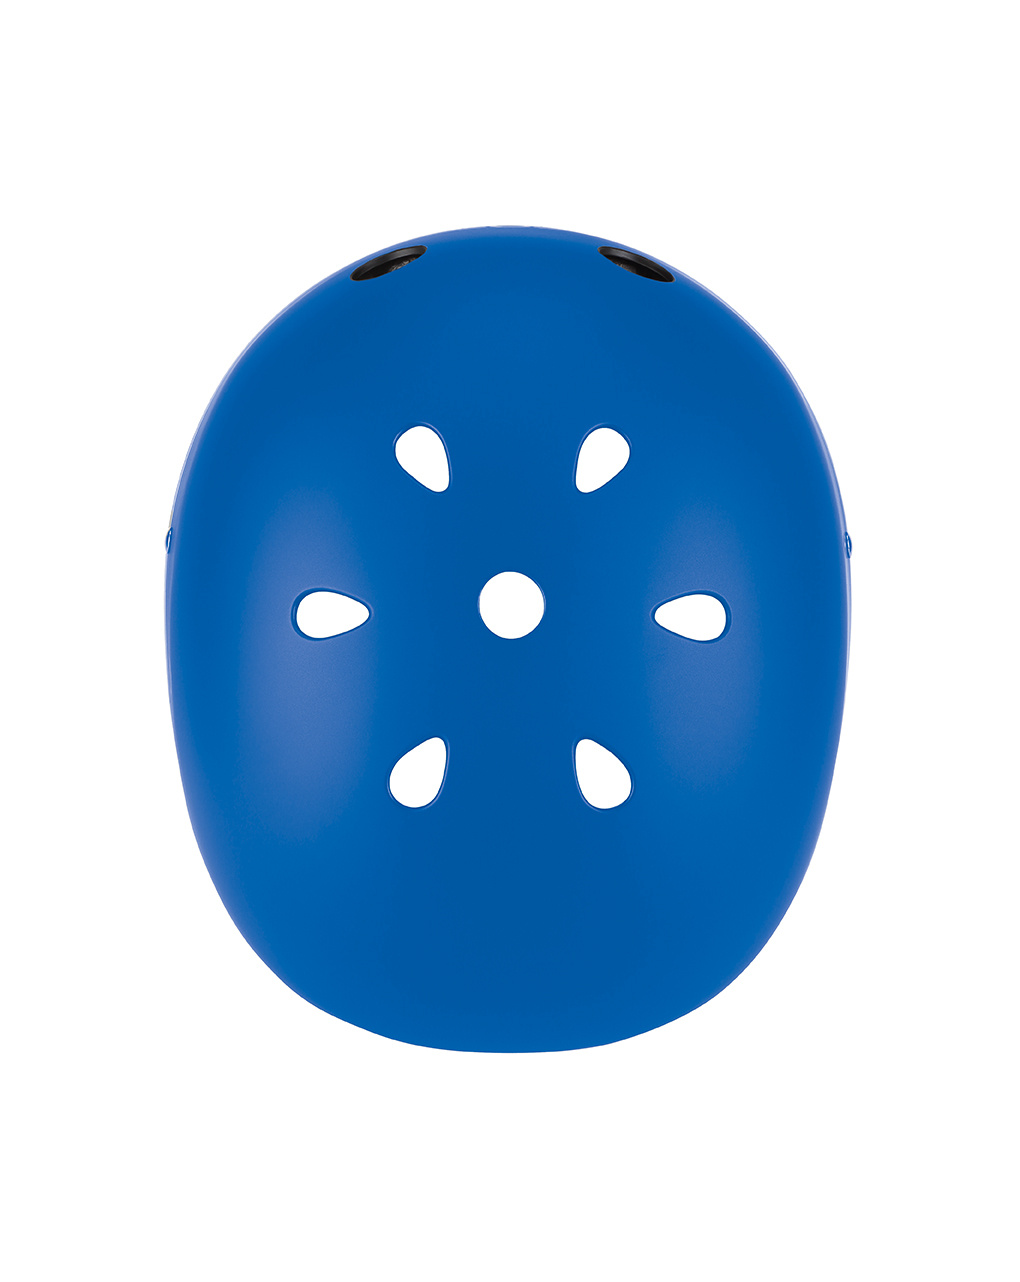 Capacete caschetto light xs/s (48-53 cm) - blu - globber - Globber